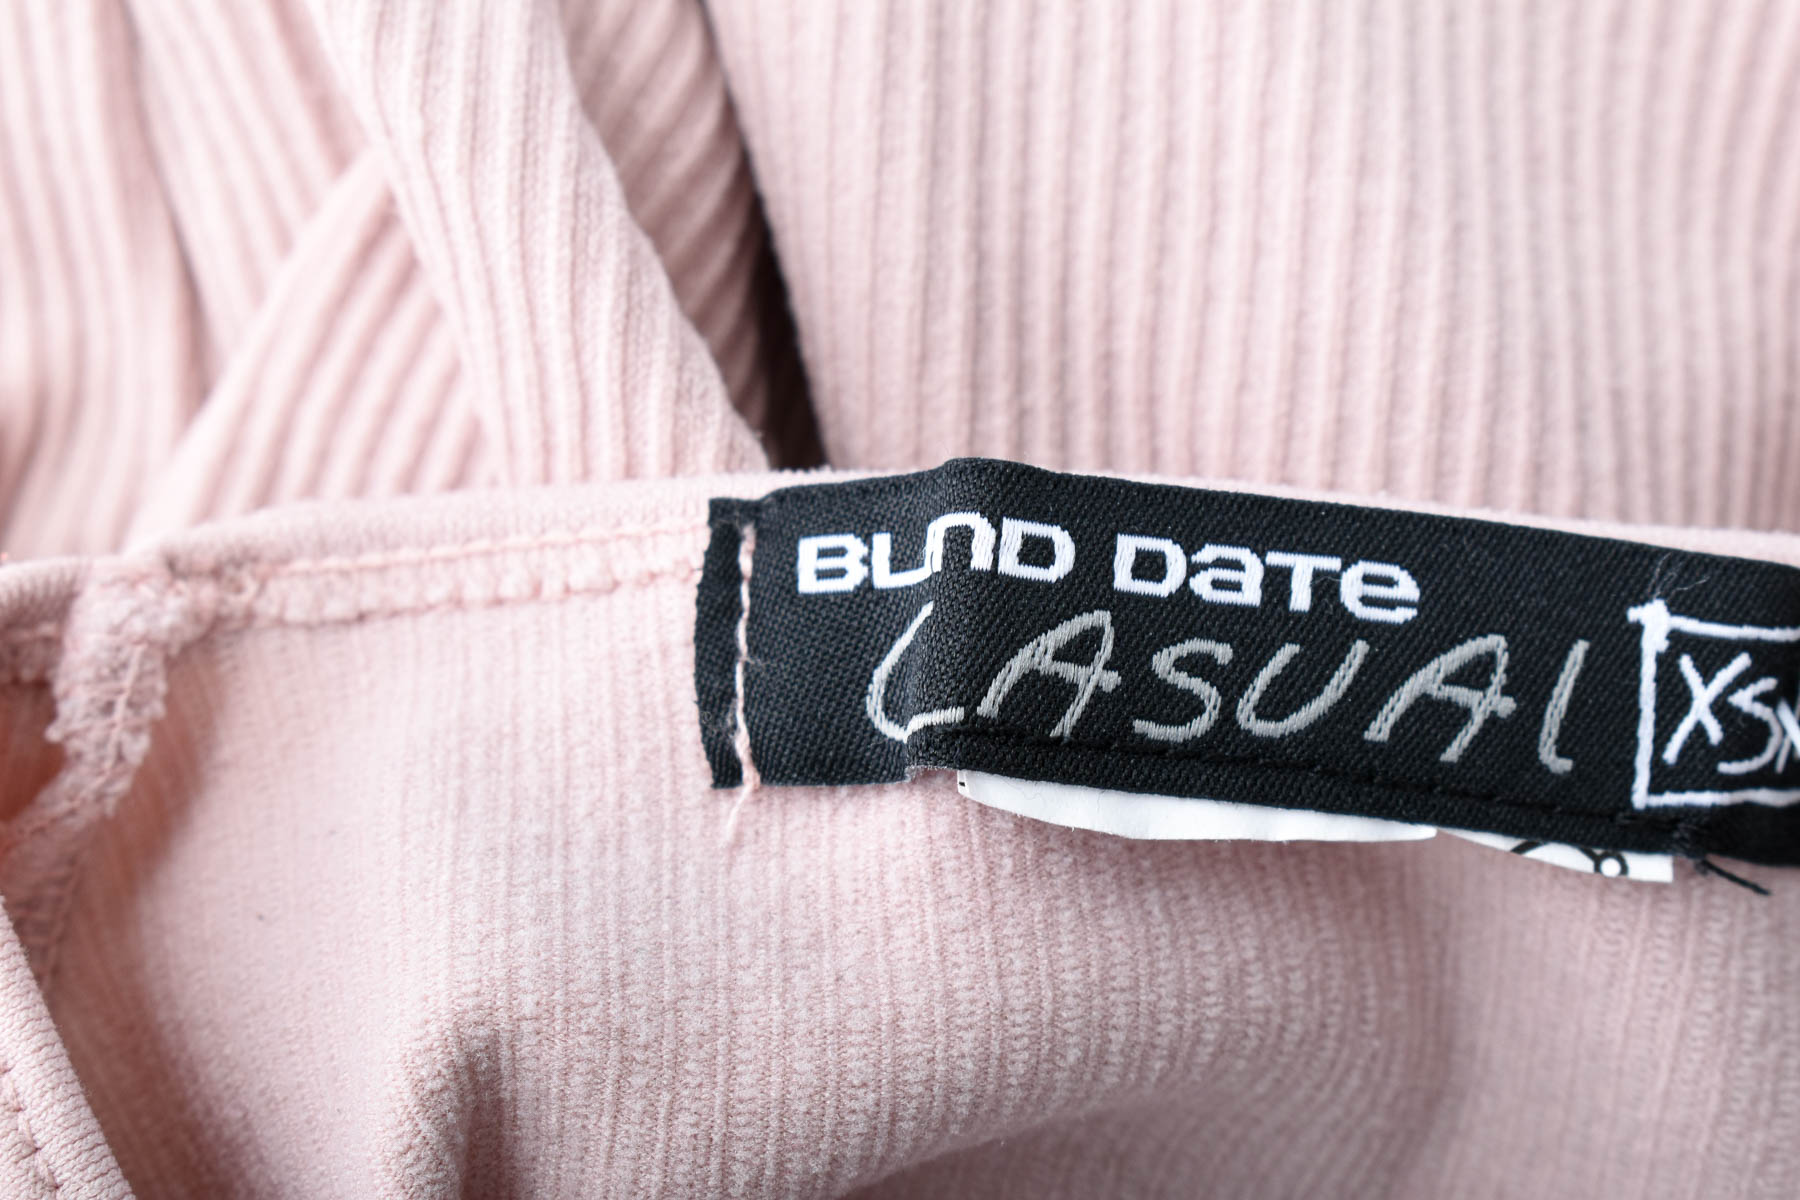 Women's blouse - Blind Date - 2